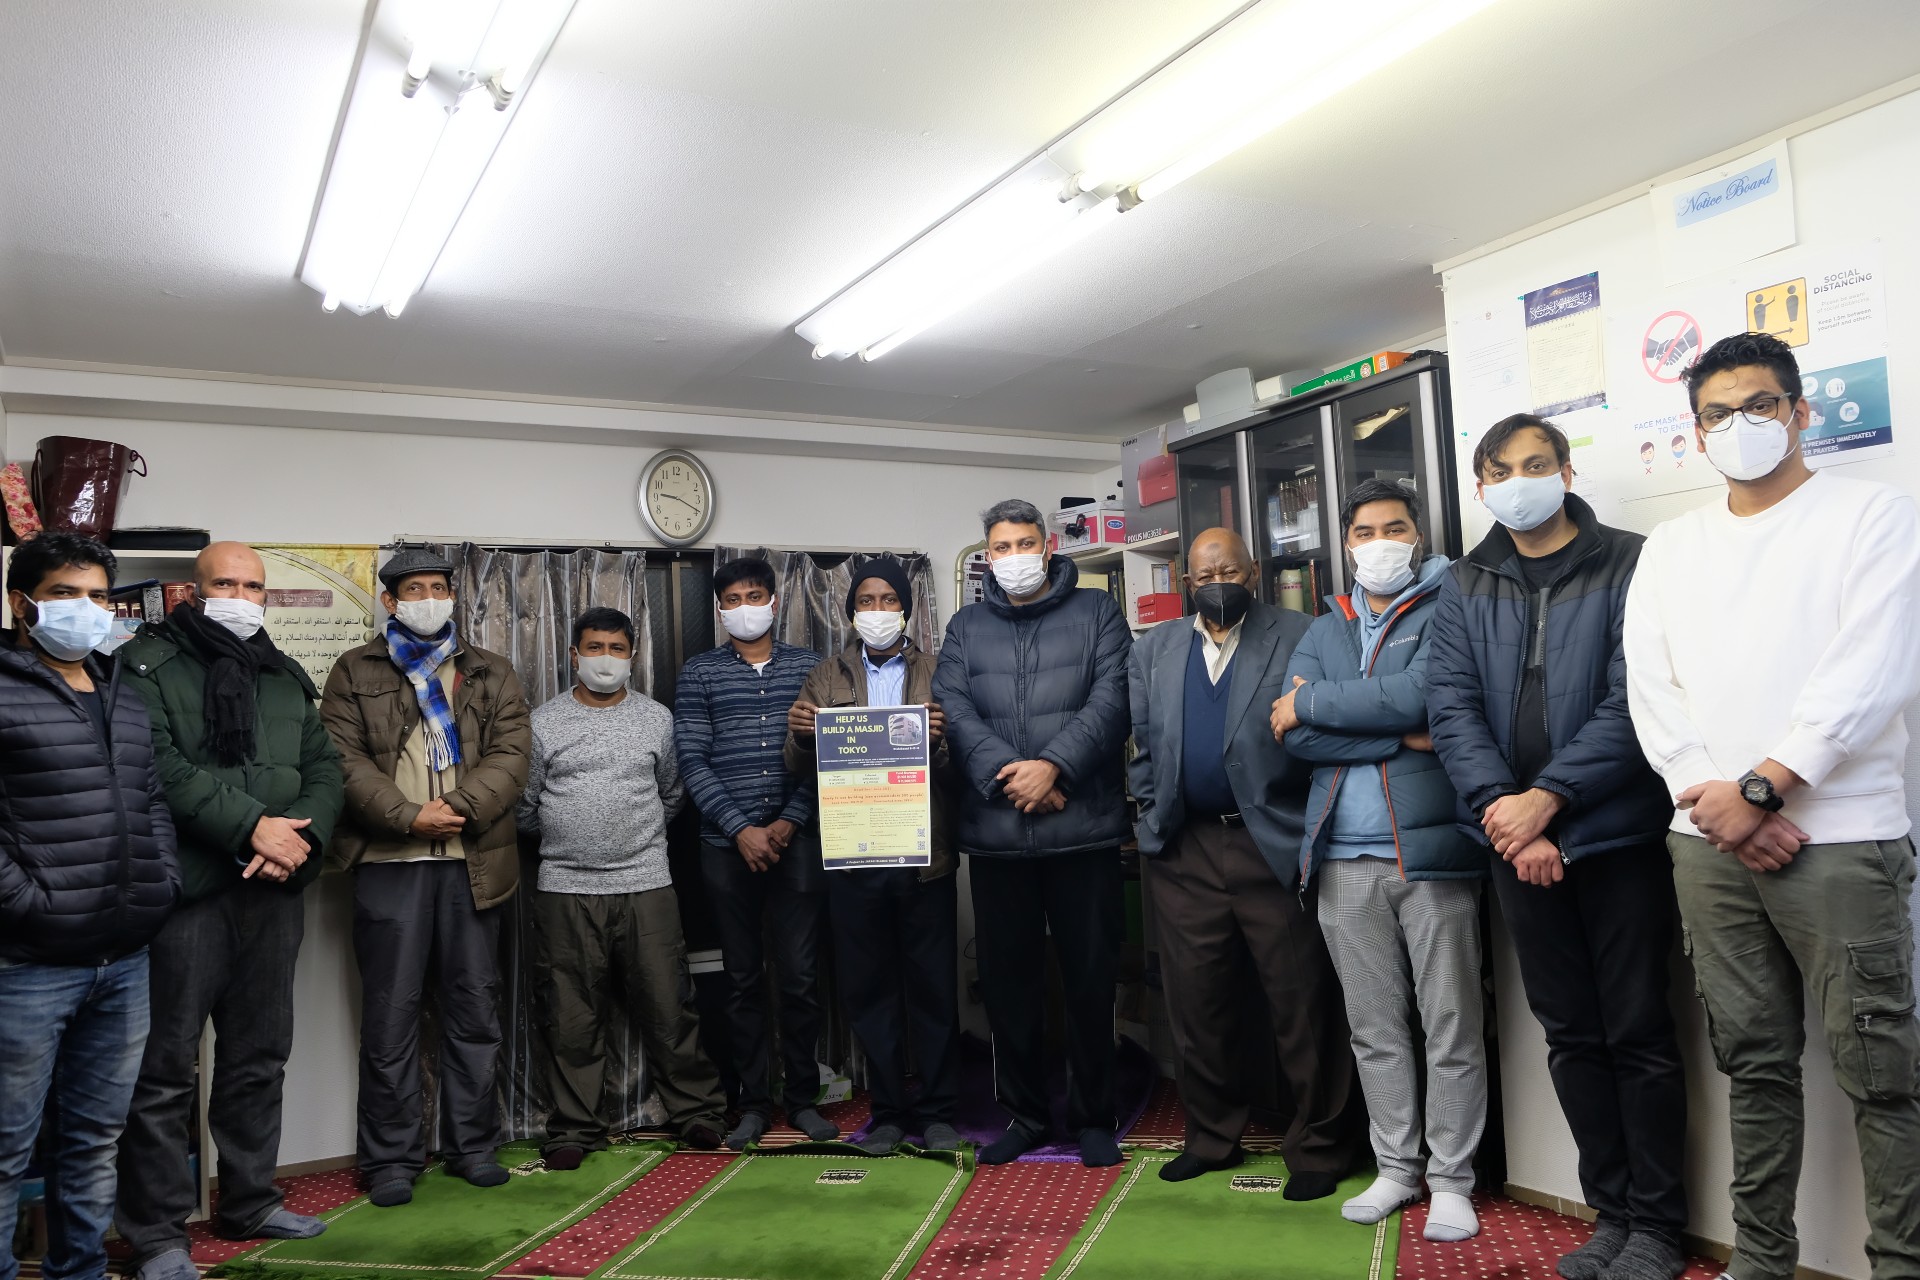 Tokyo Masjid – Help Us Build A Tokyo Masjid